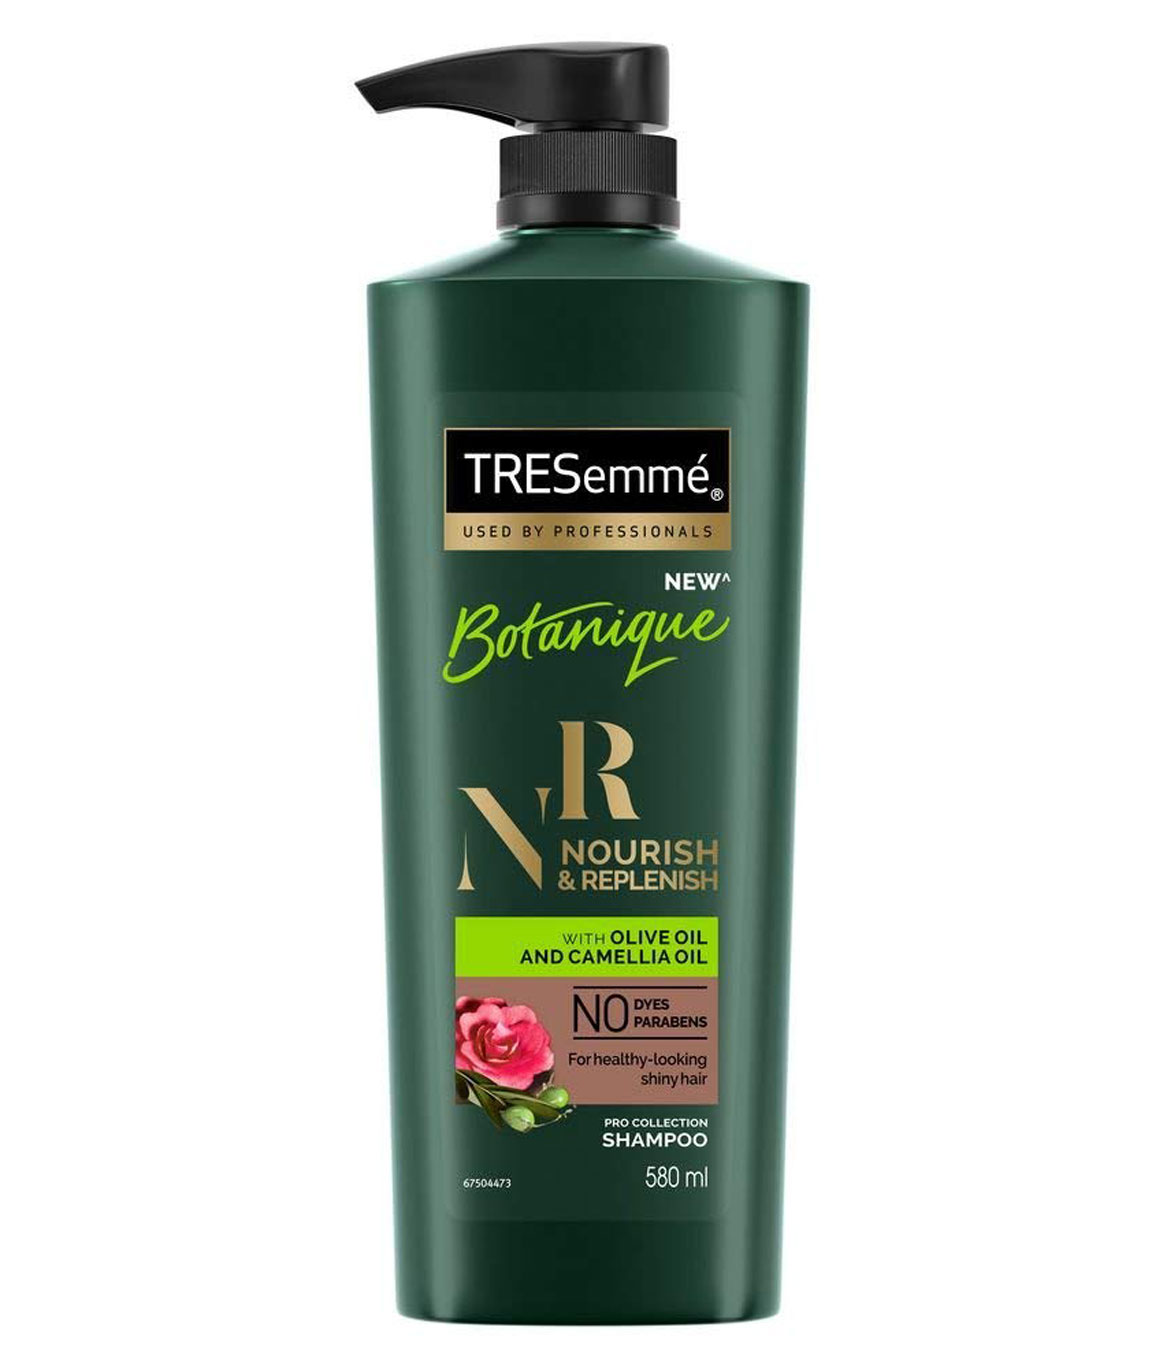 TRESemme Botanique Nourish and Replenish Shampoo, 580ml